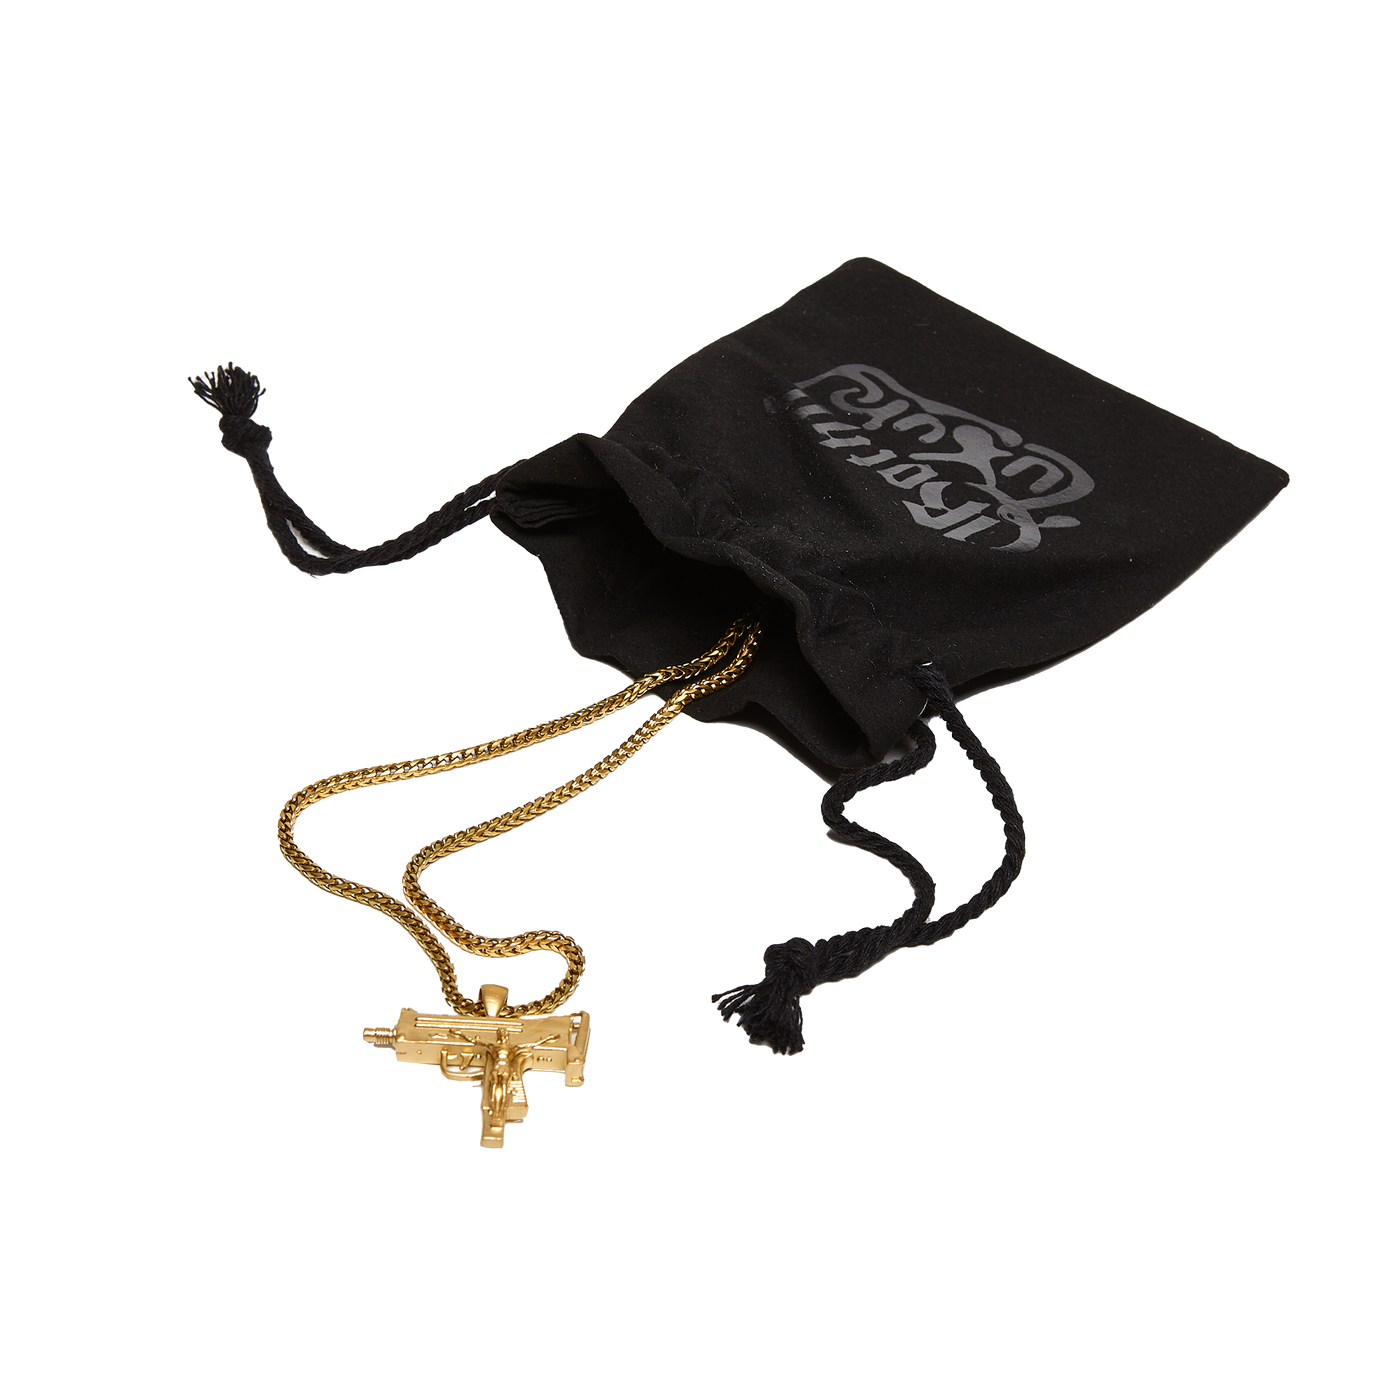 Limited Edition Meechy Darko Mac-10 Gold Chain